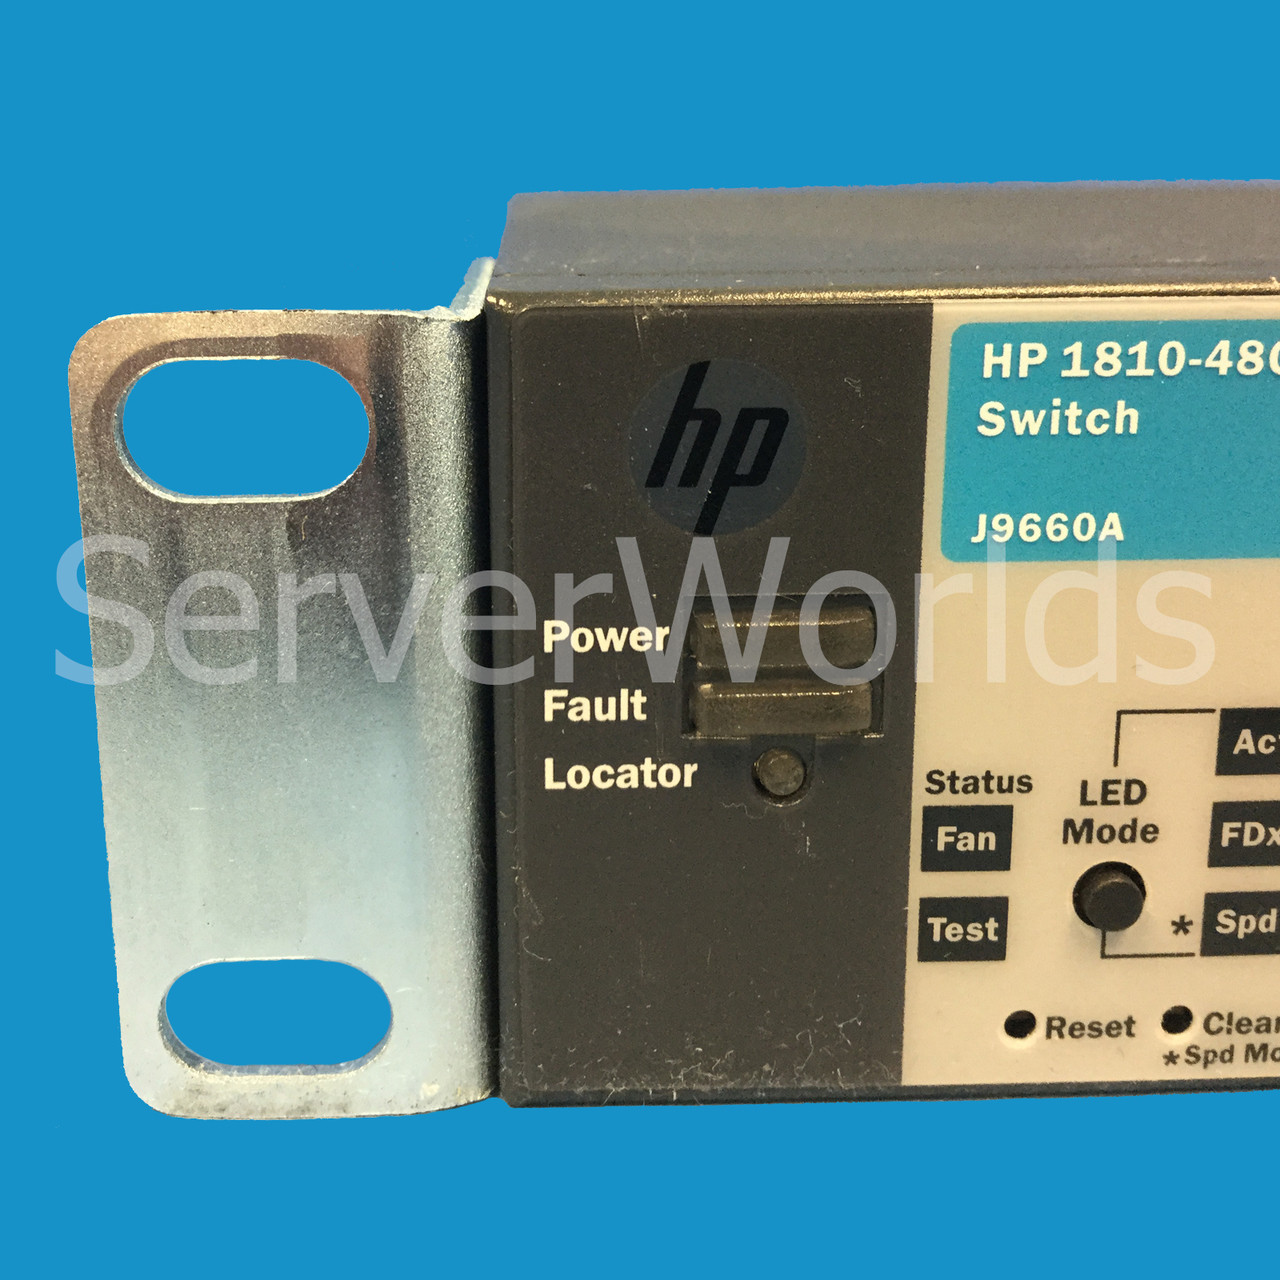 HP Procurve J9660A V1810 - 48G 48 port Switch